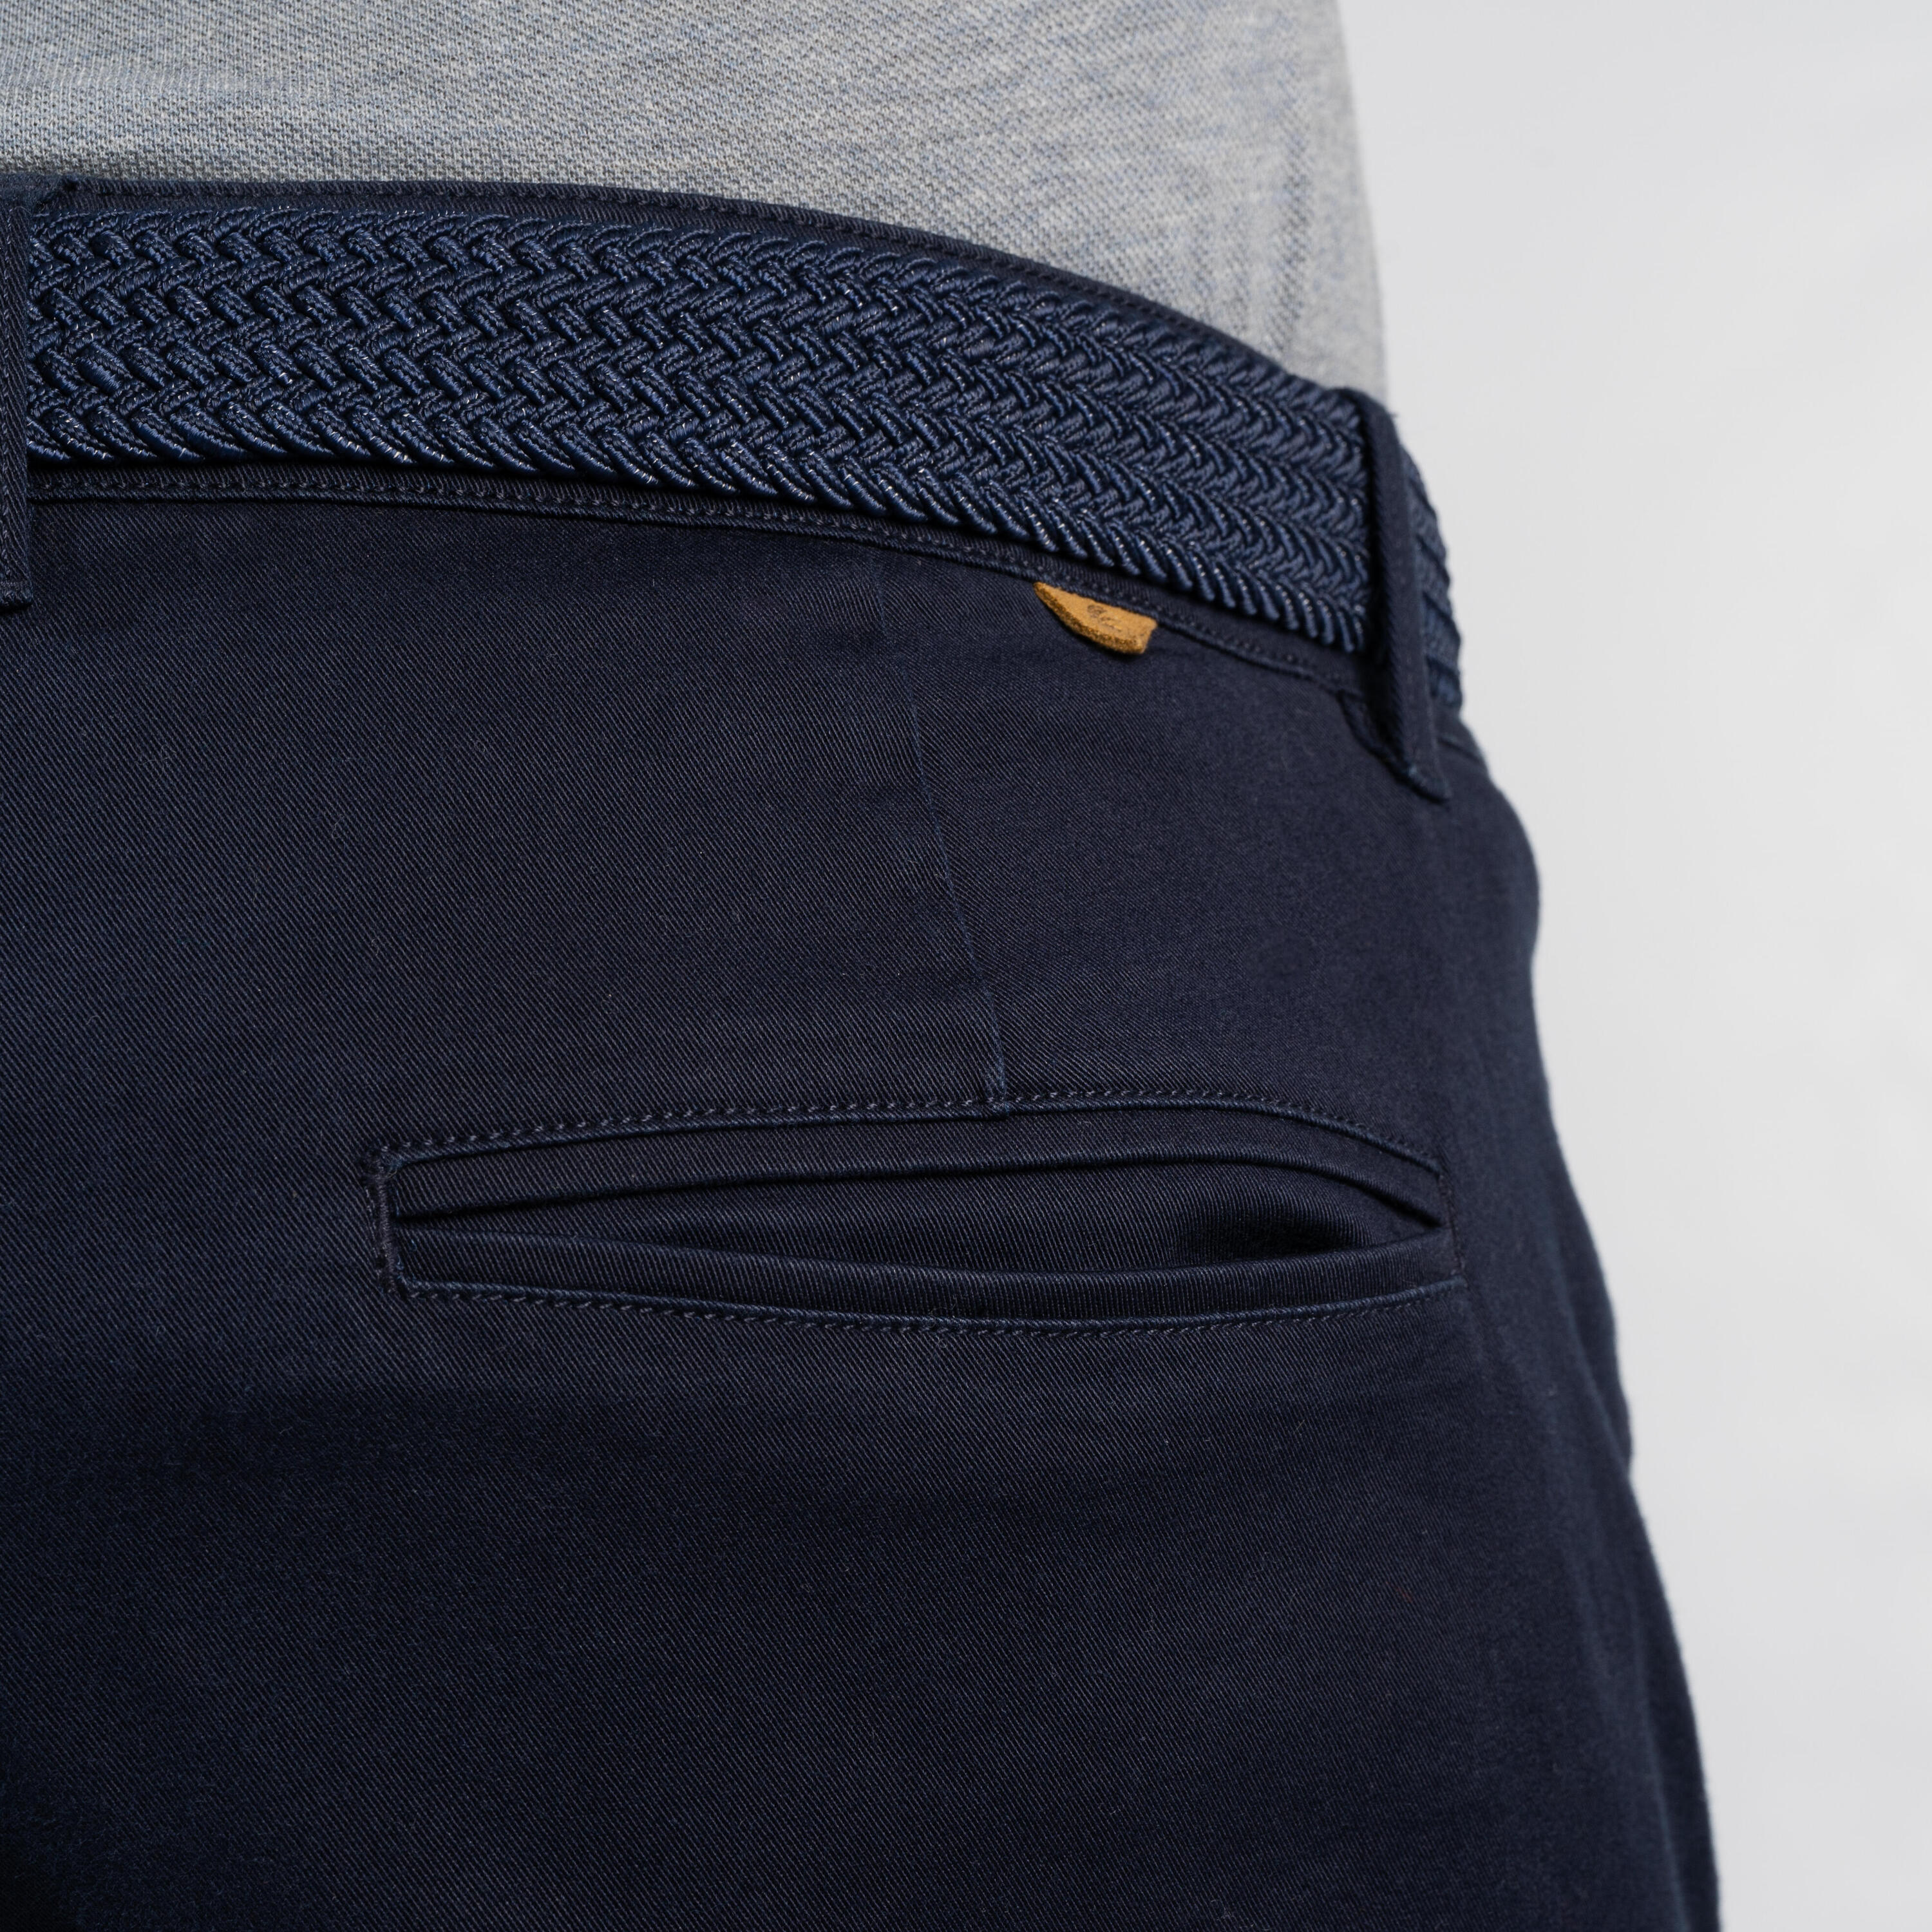 Men's golf trousers - MW500 navy blue 5/6